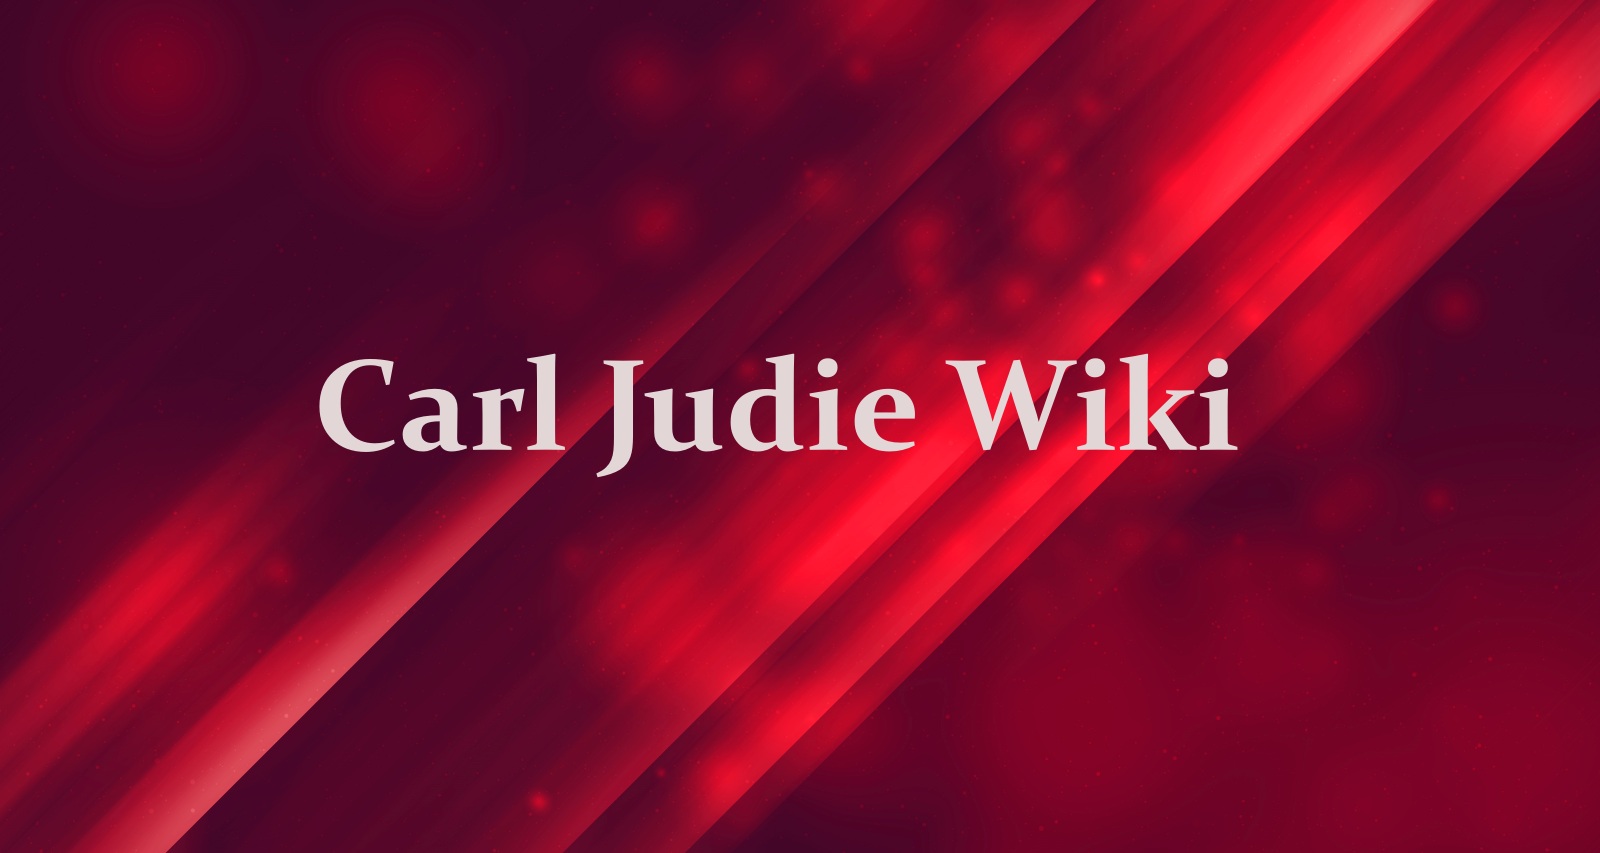 Carl Judie Wiki